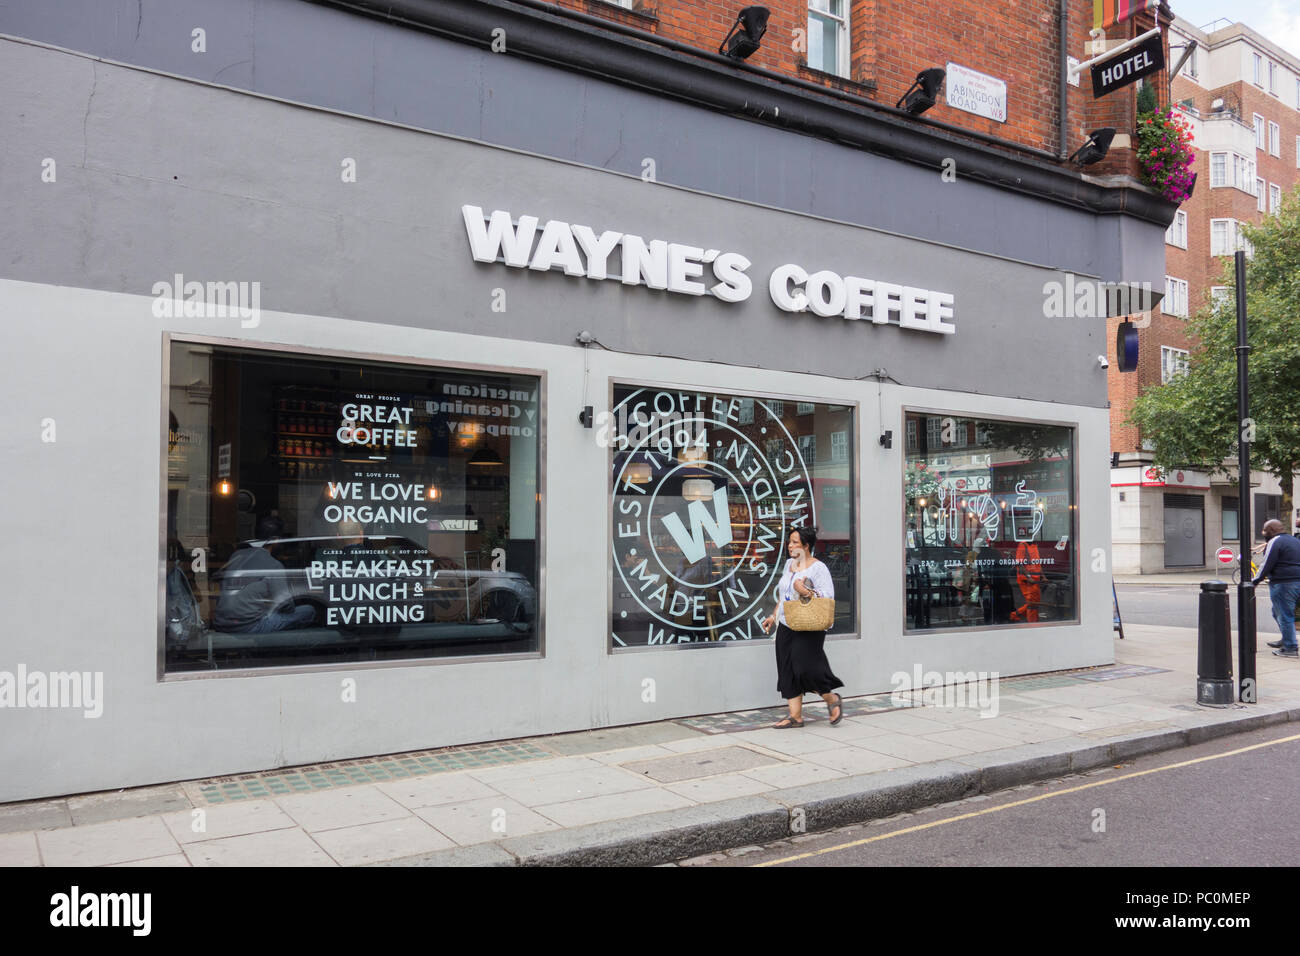 Wayne's Coffee die Schwedische basierten multi-national organic Kaffee Kette auf der Kensington High Street, London, UK Stockfoto